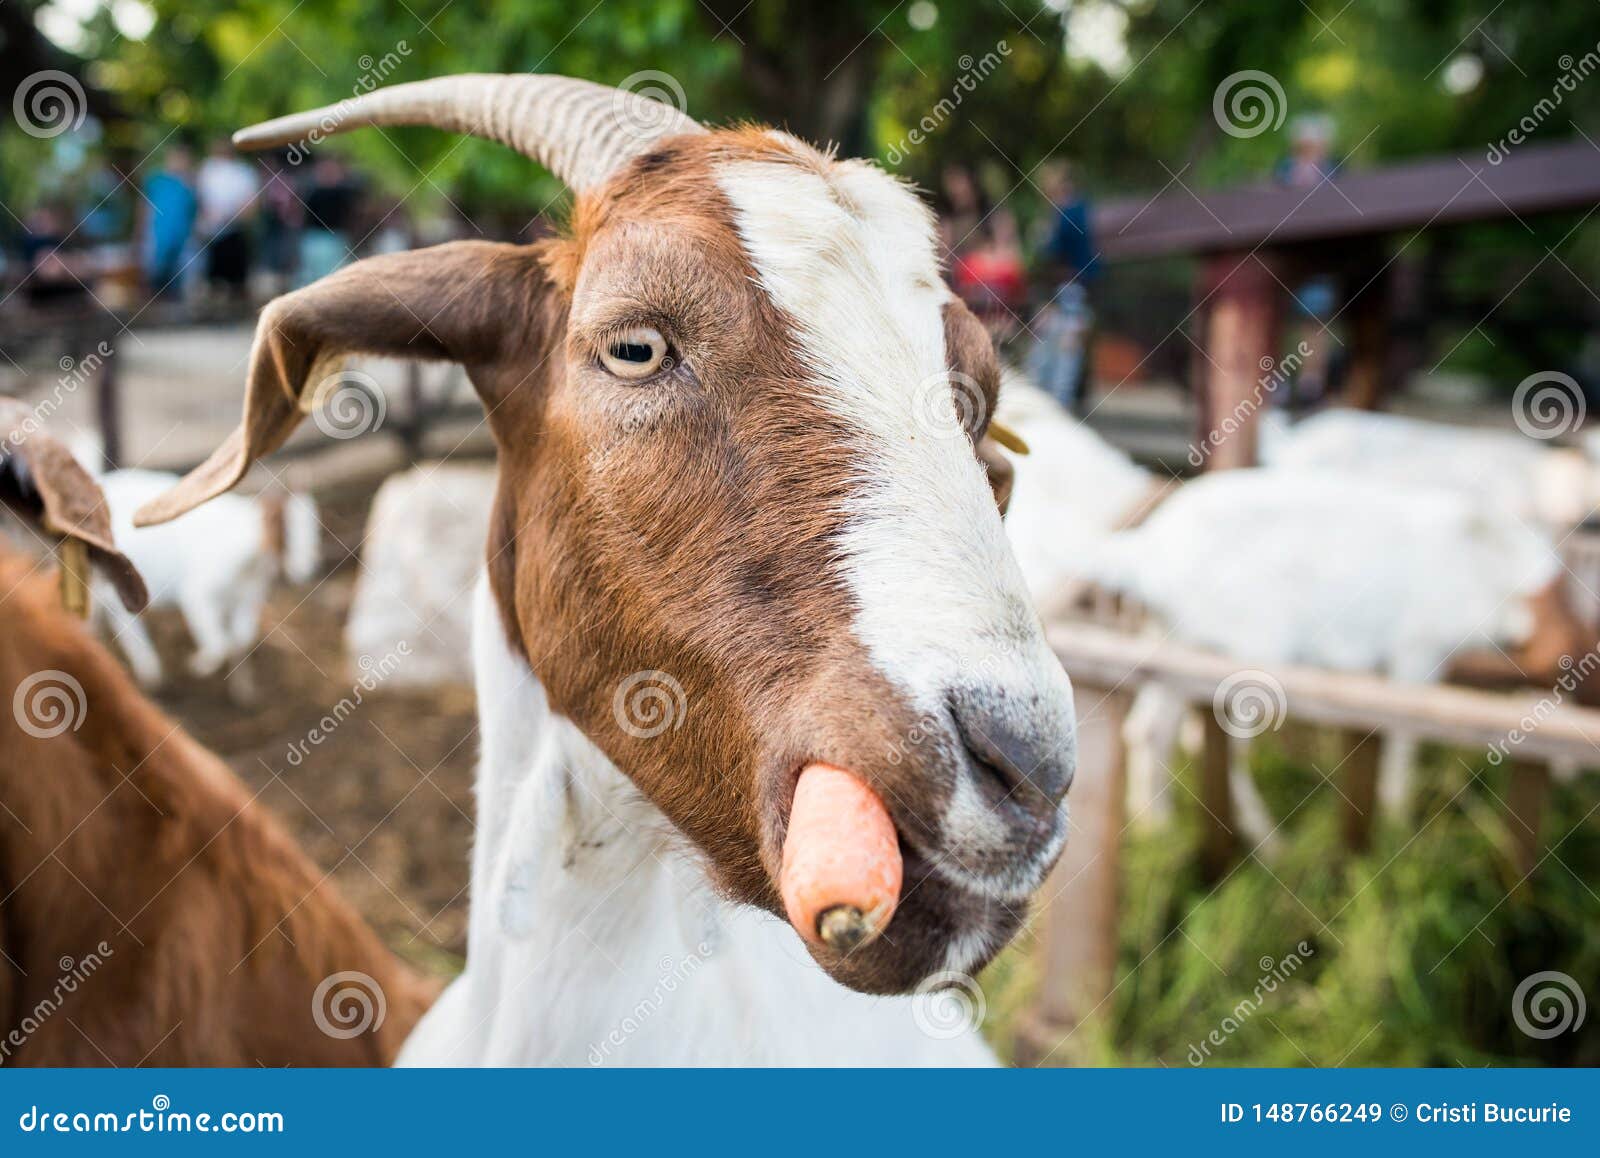 funny goat portrait eating carrots